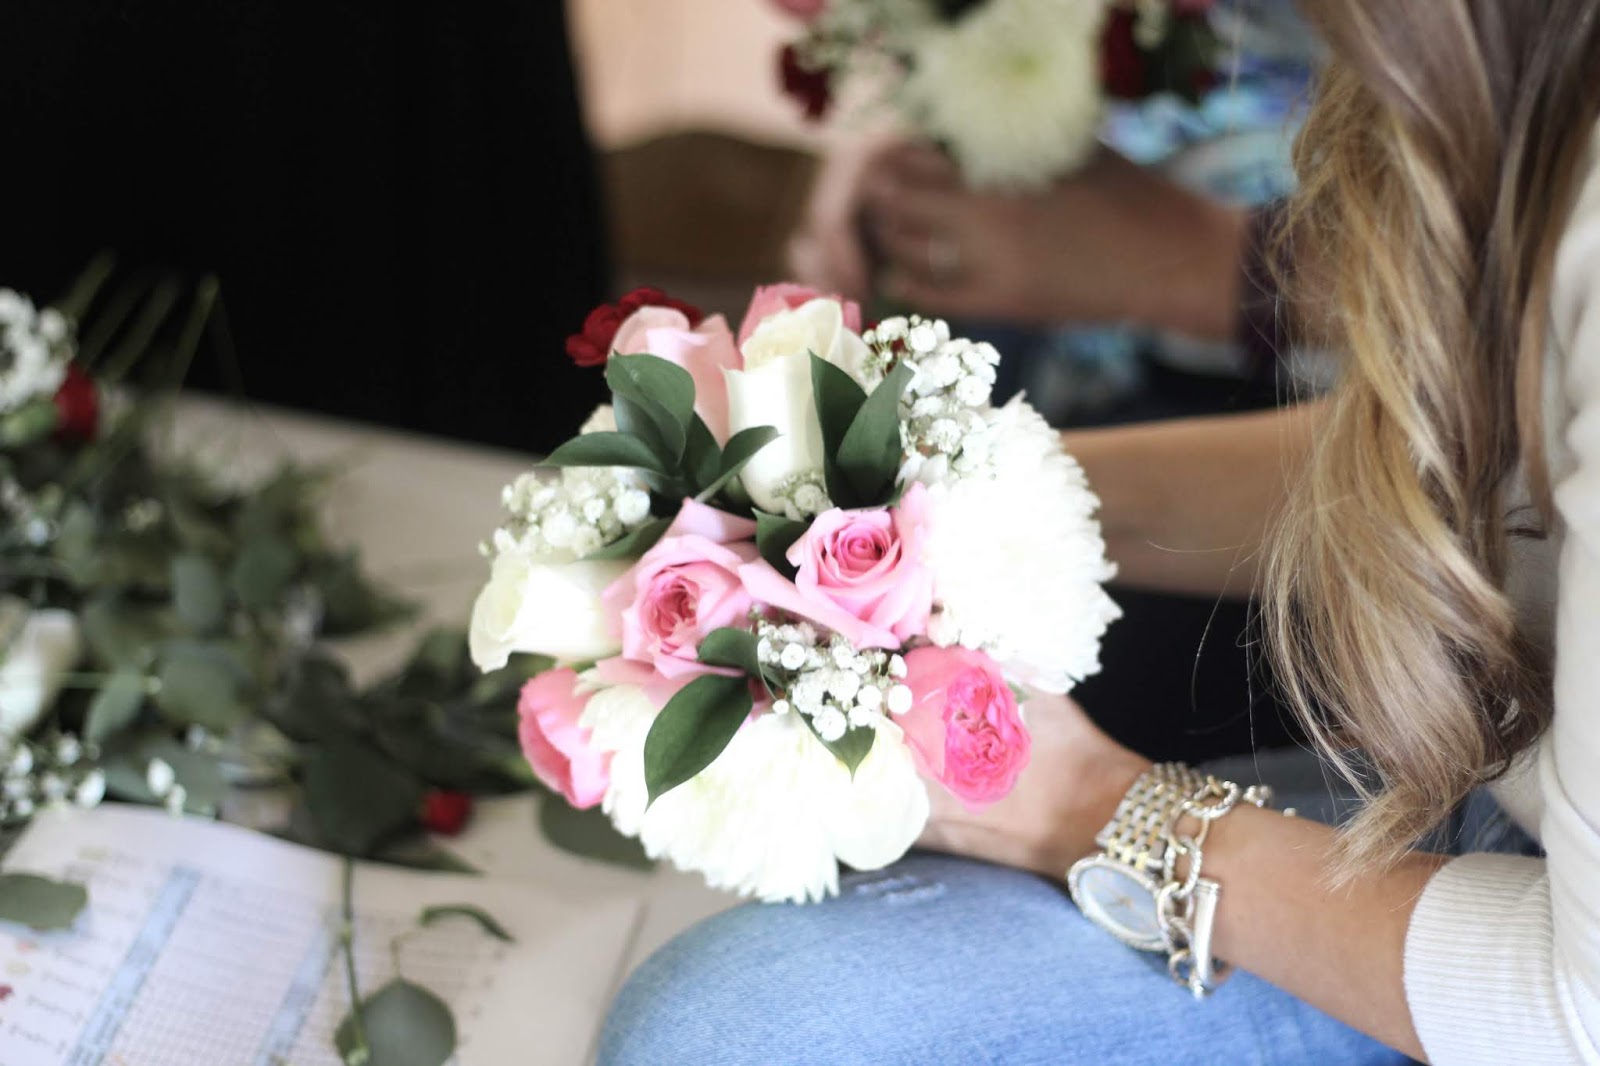 How to Make a Bridal Bouquet - Wedding Flower Tutorials